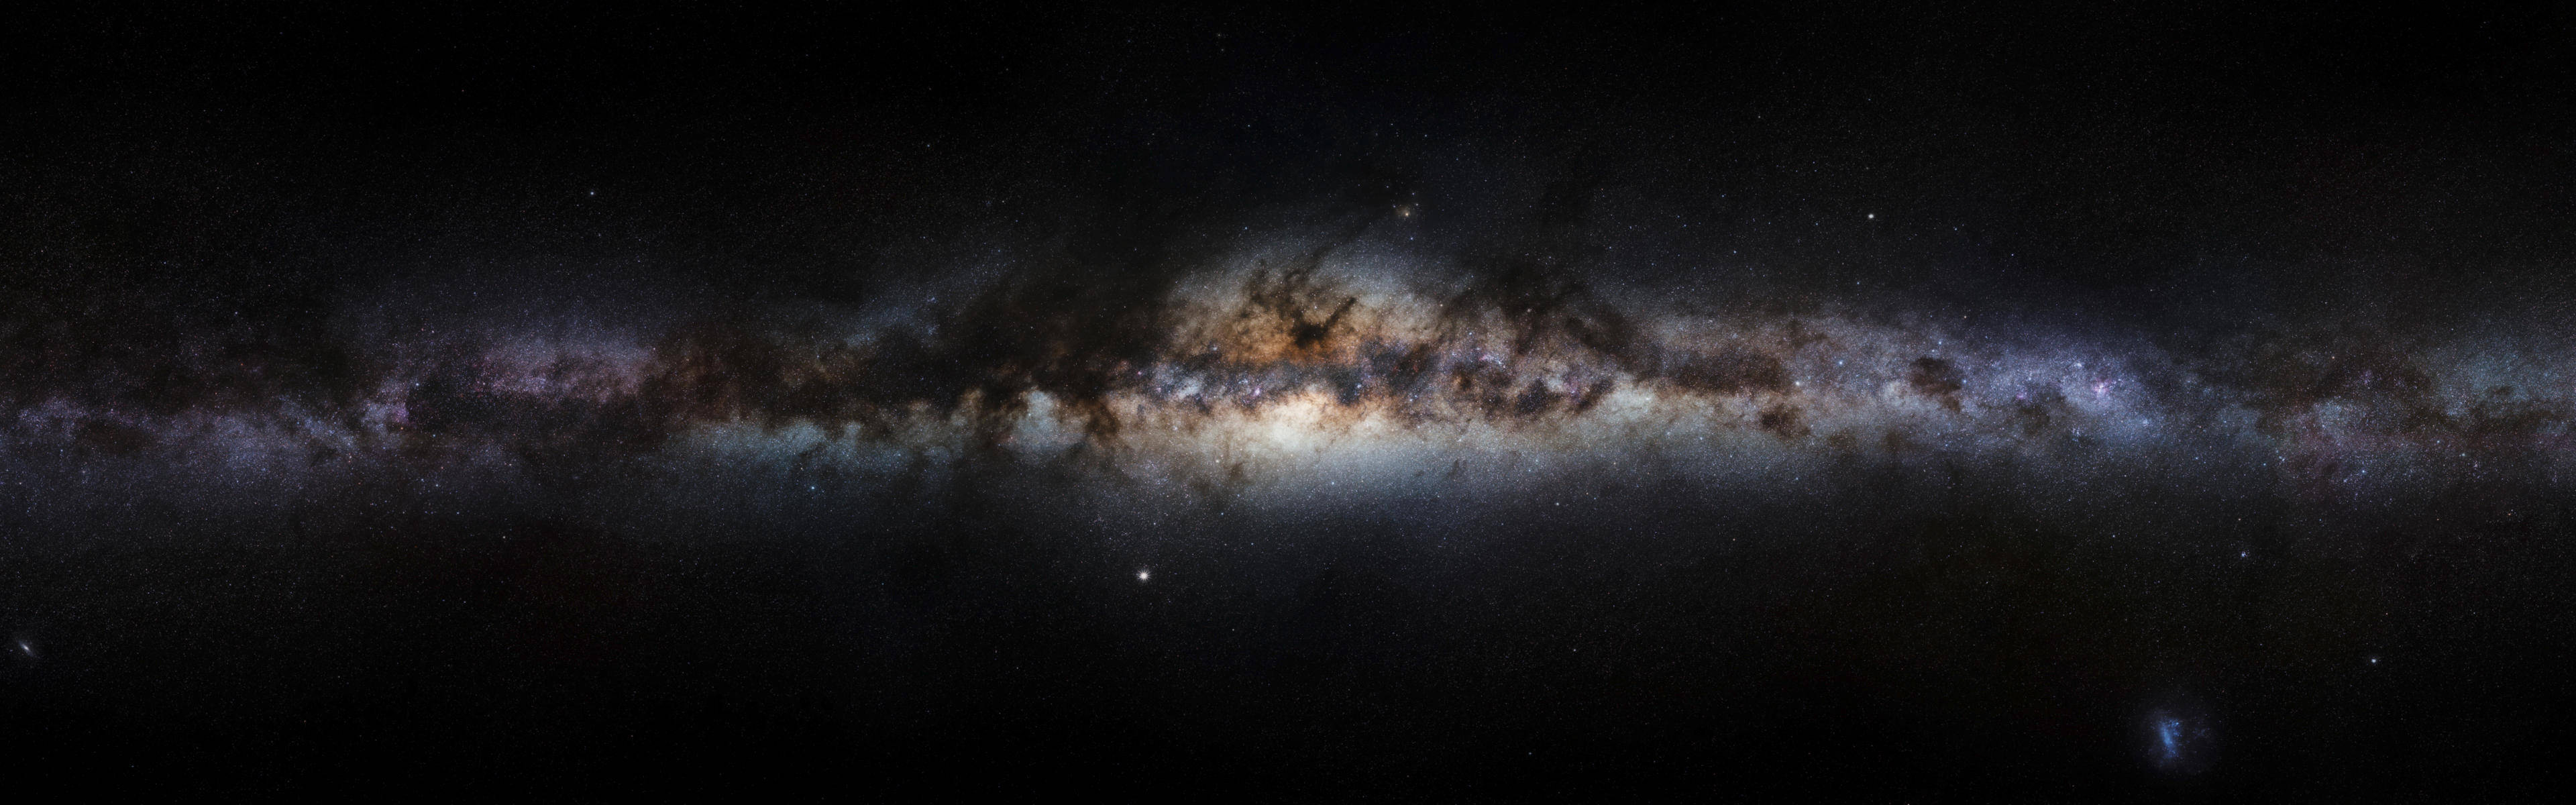 High Resolution Dual Monitor Milky Way Wallpaper